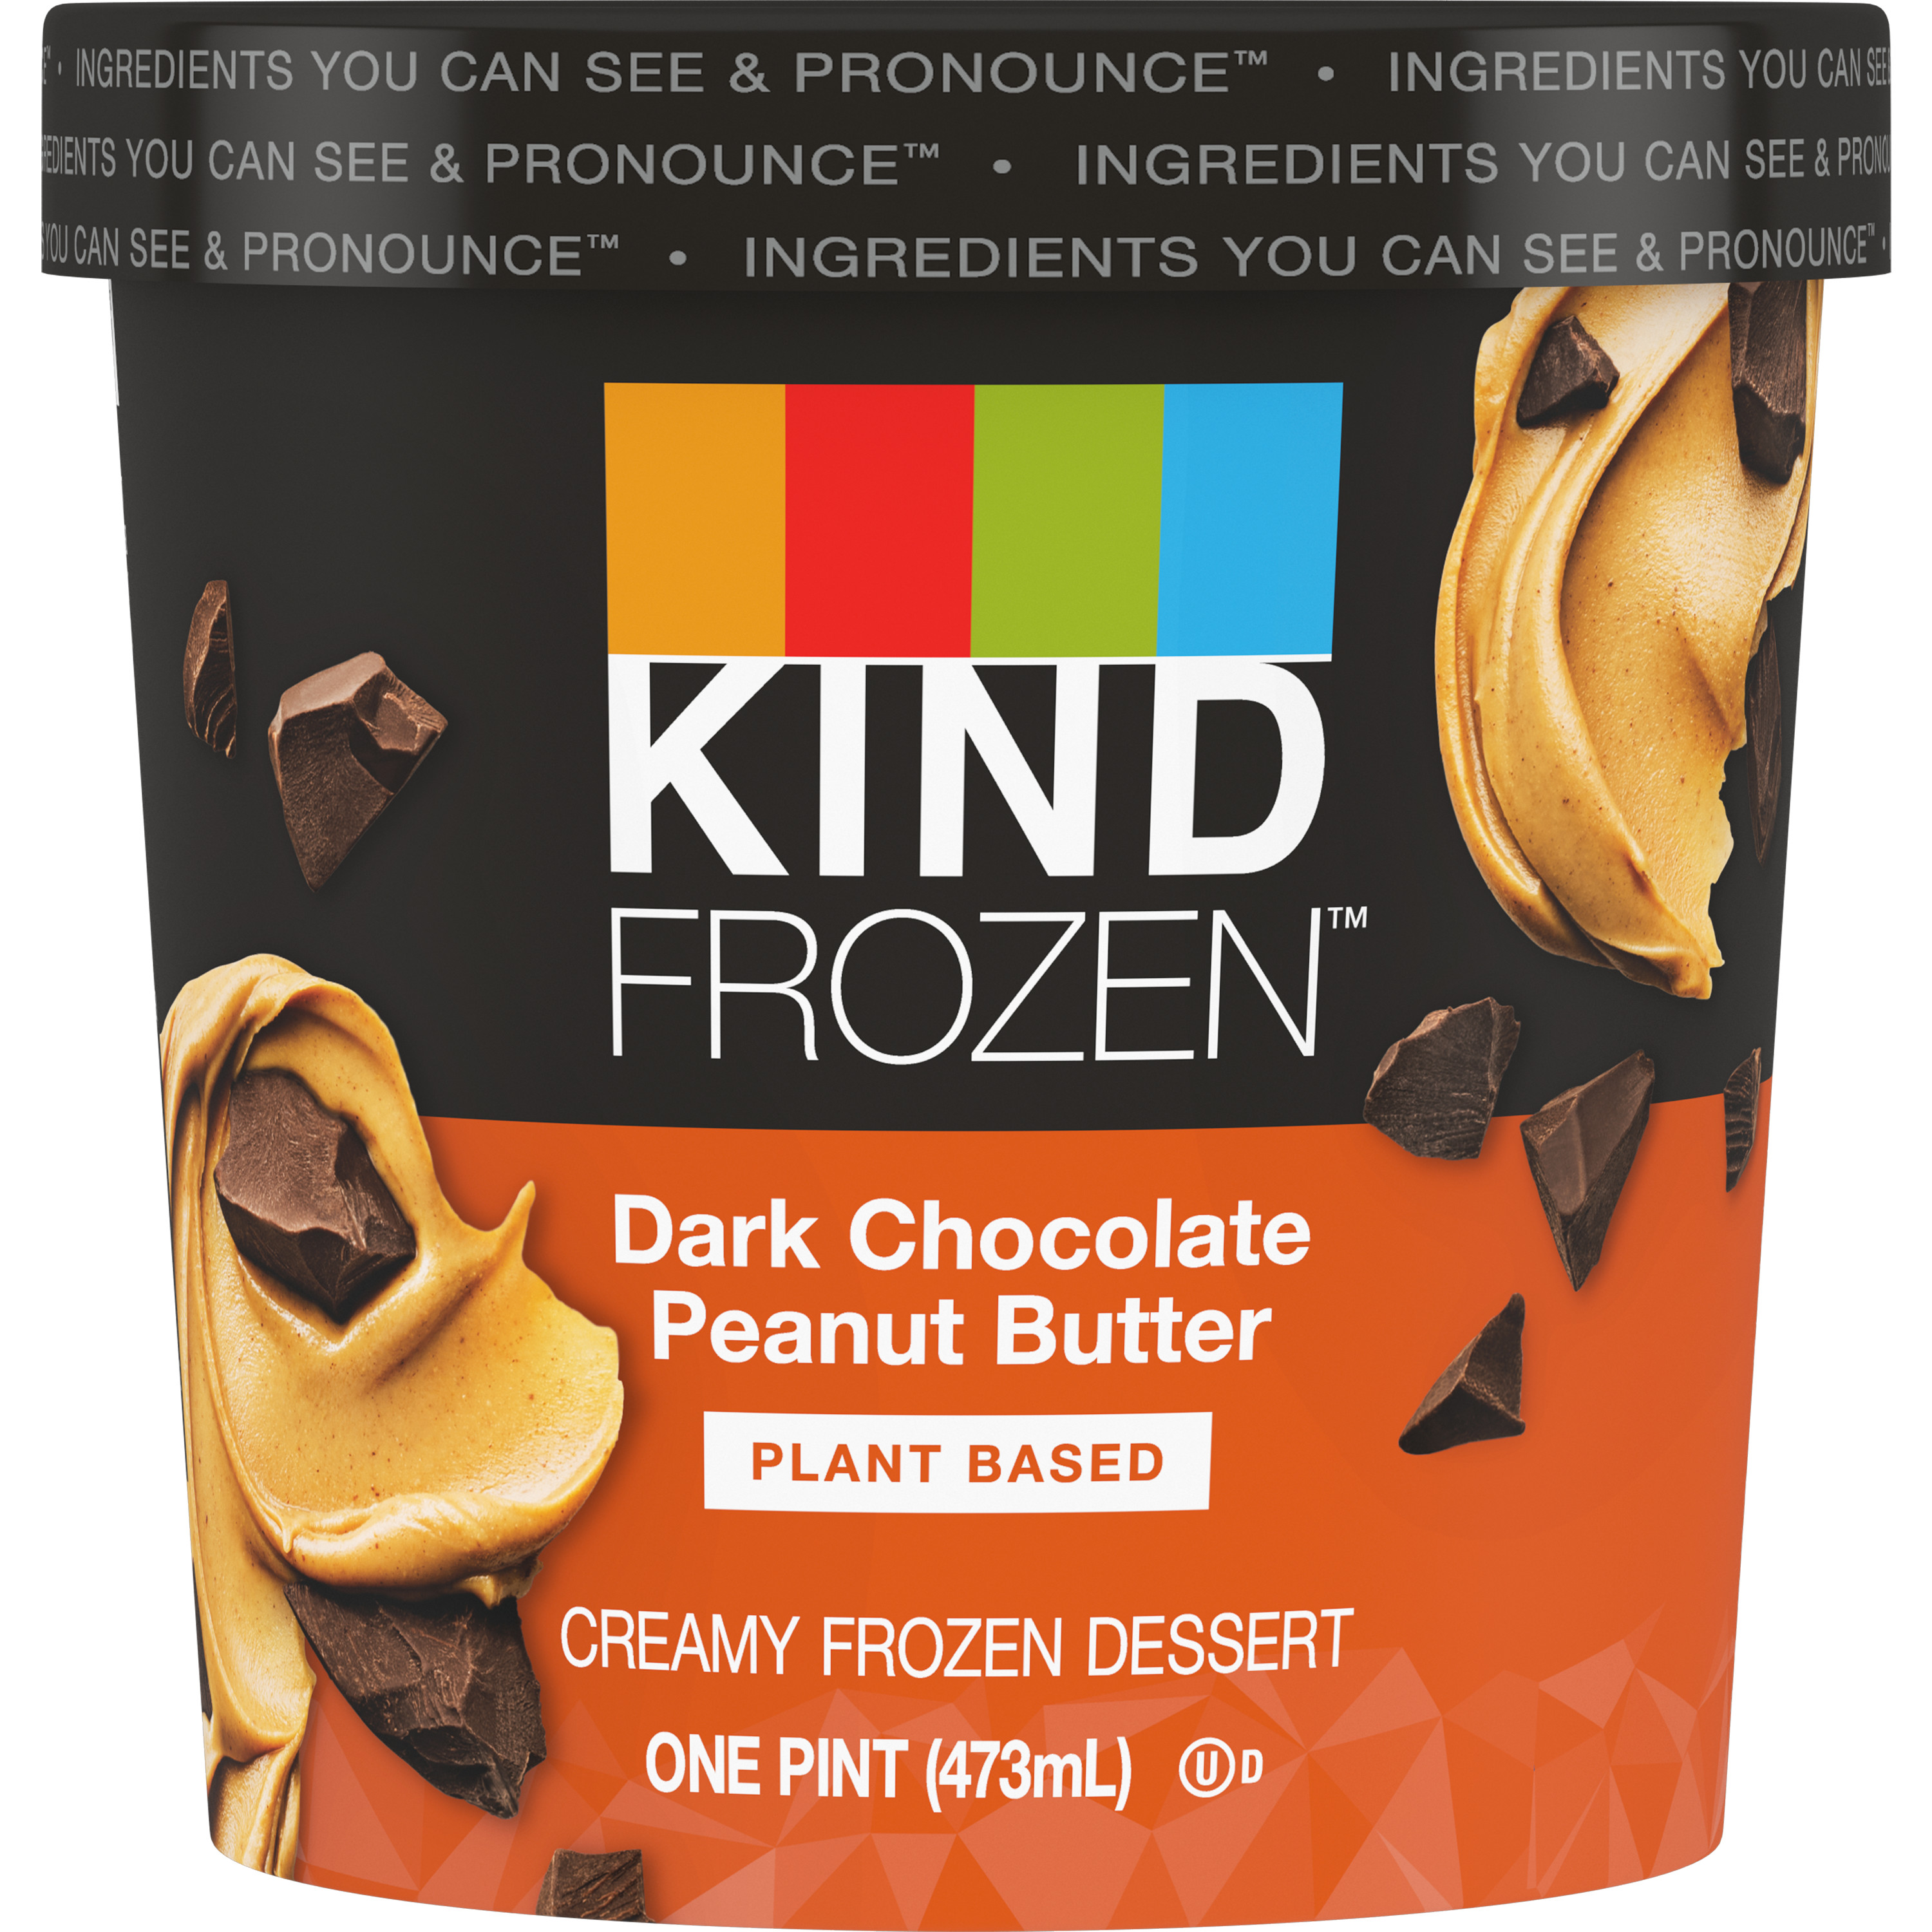 KIND FROZEN Dark Chocolate Peanut Butter Pint - image 1 of 1